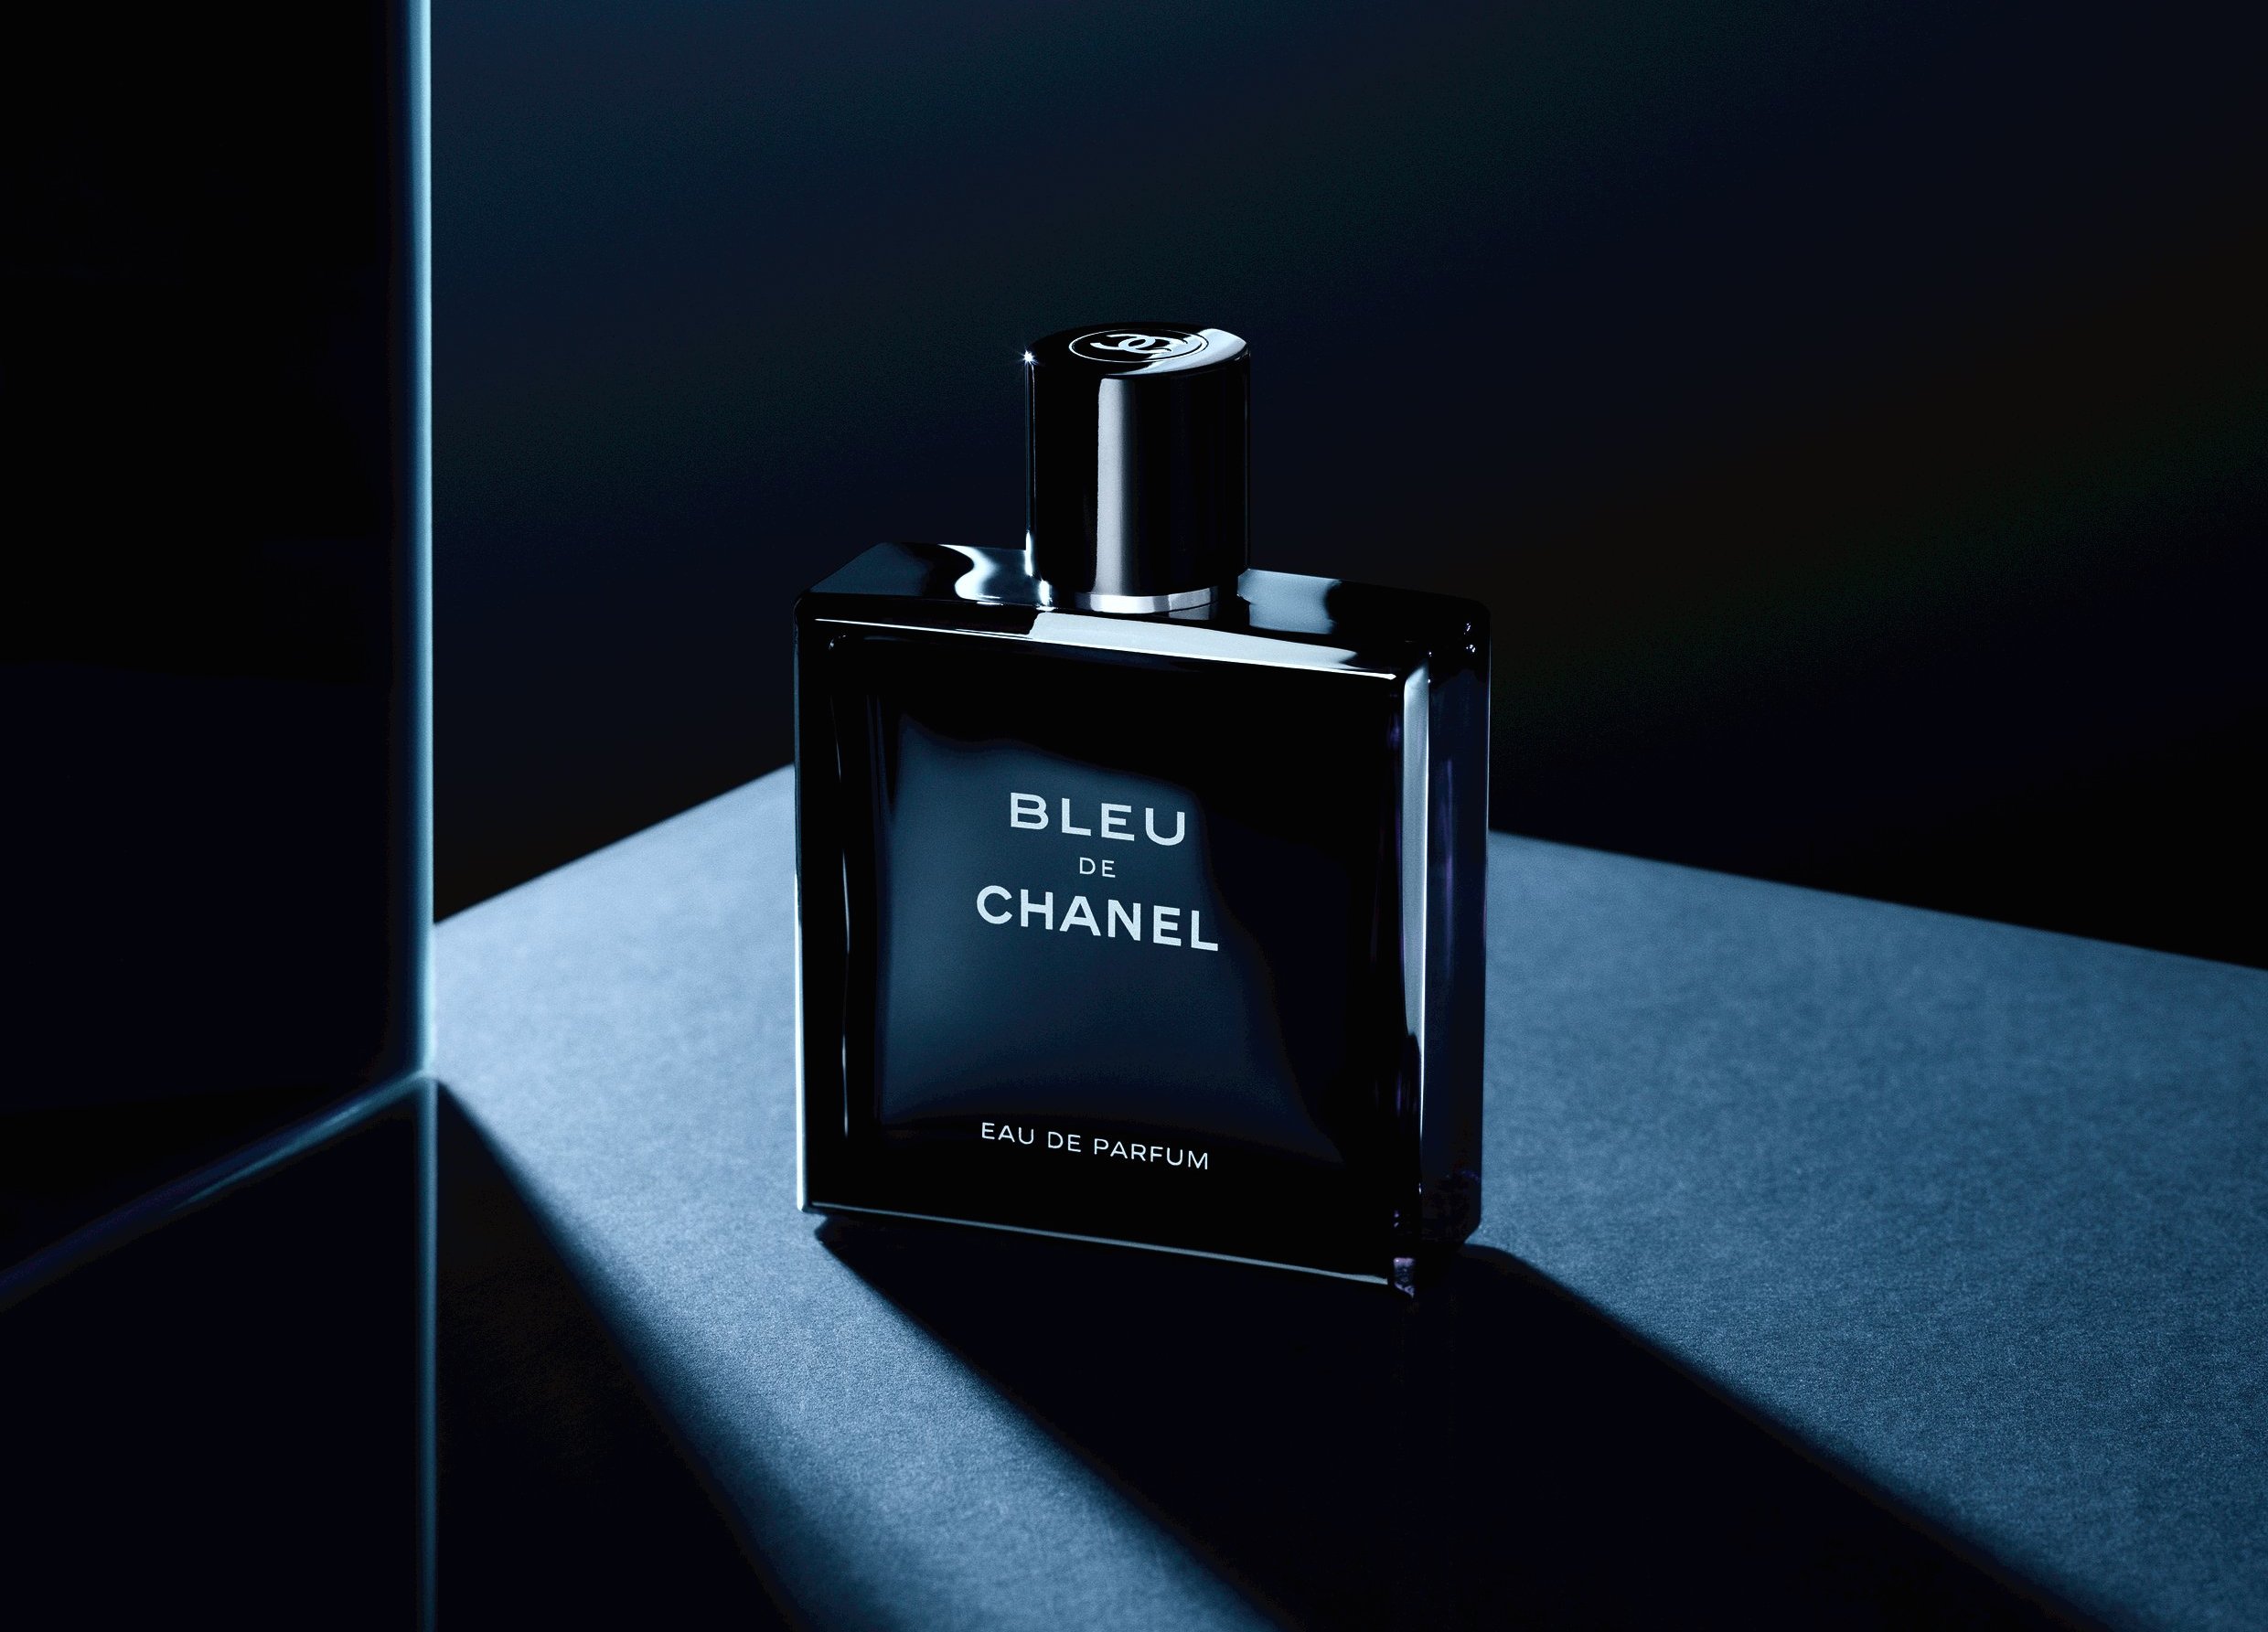 : Is Bleu de Chanel good for